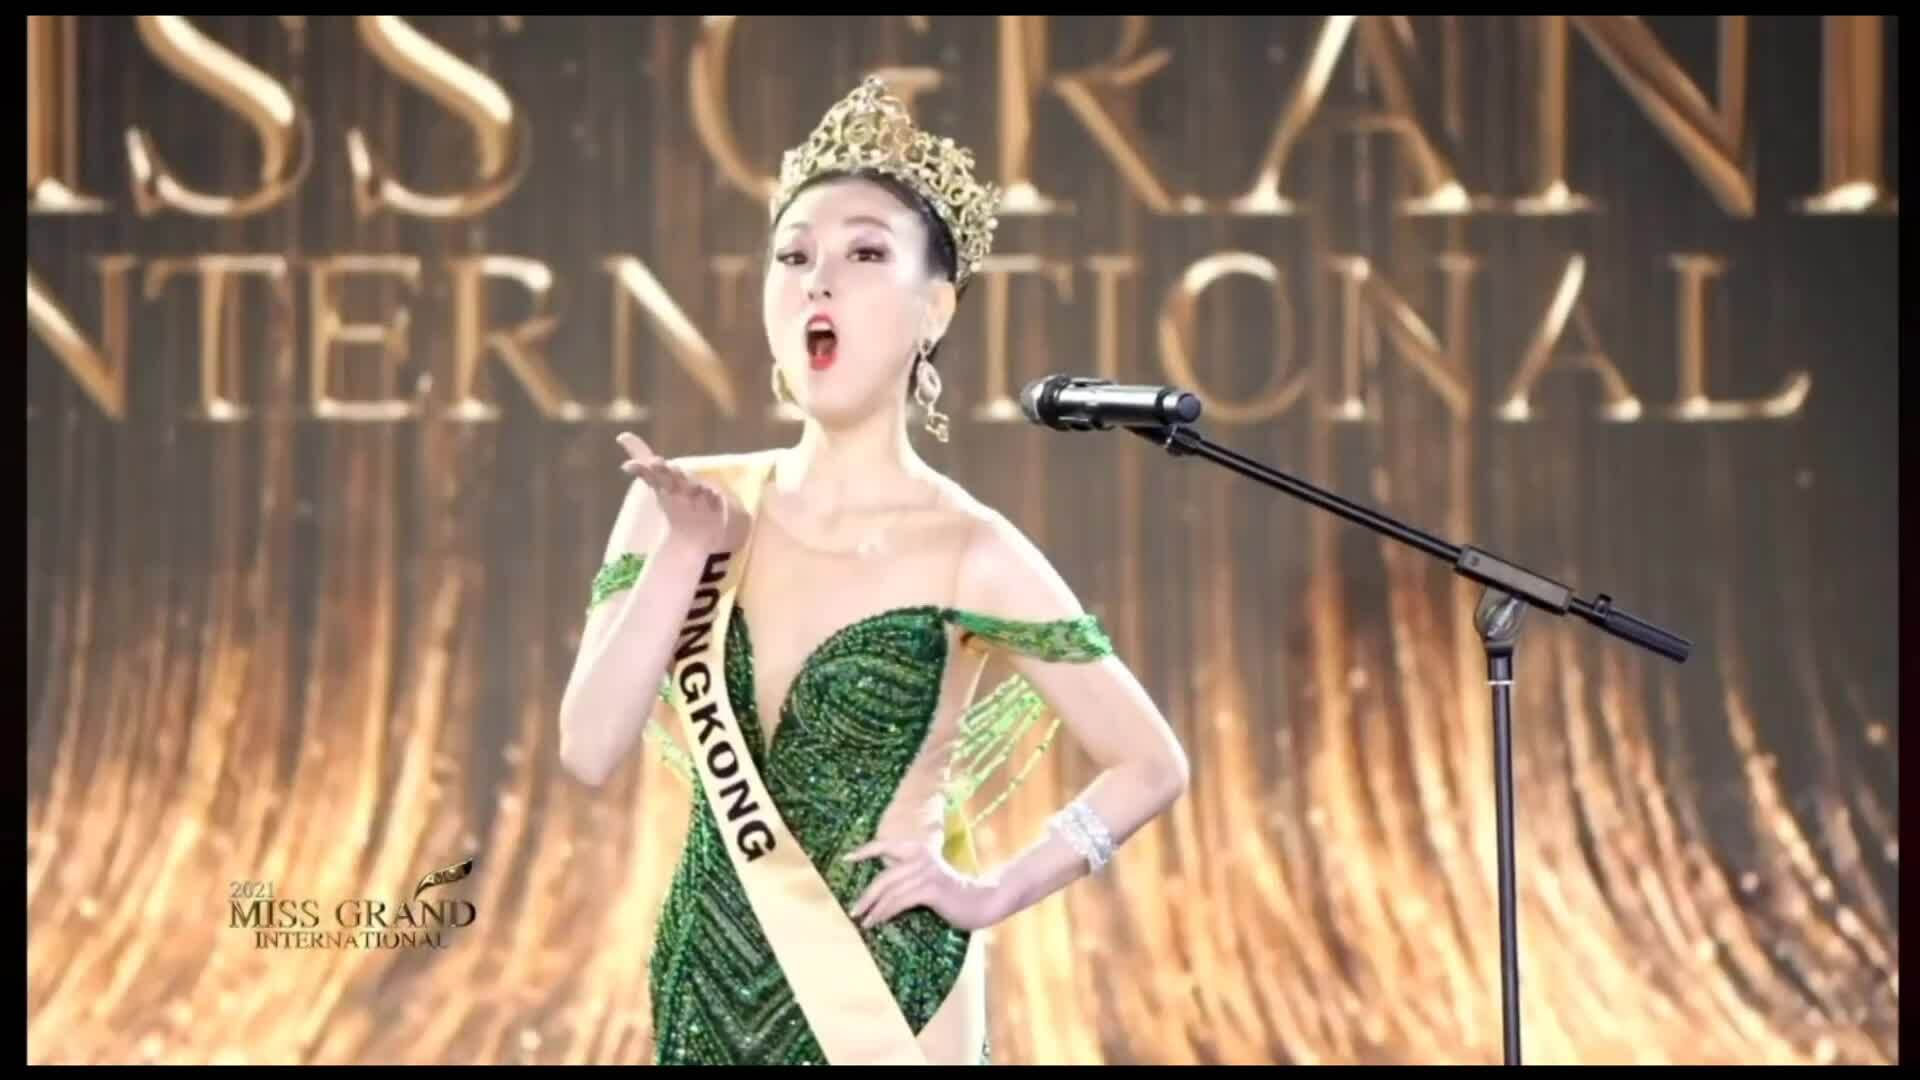 Sen Yang Hong Kong tại Miss Grand 2021